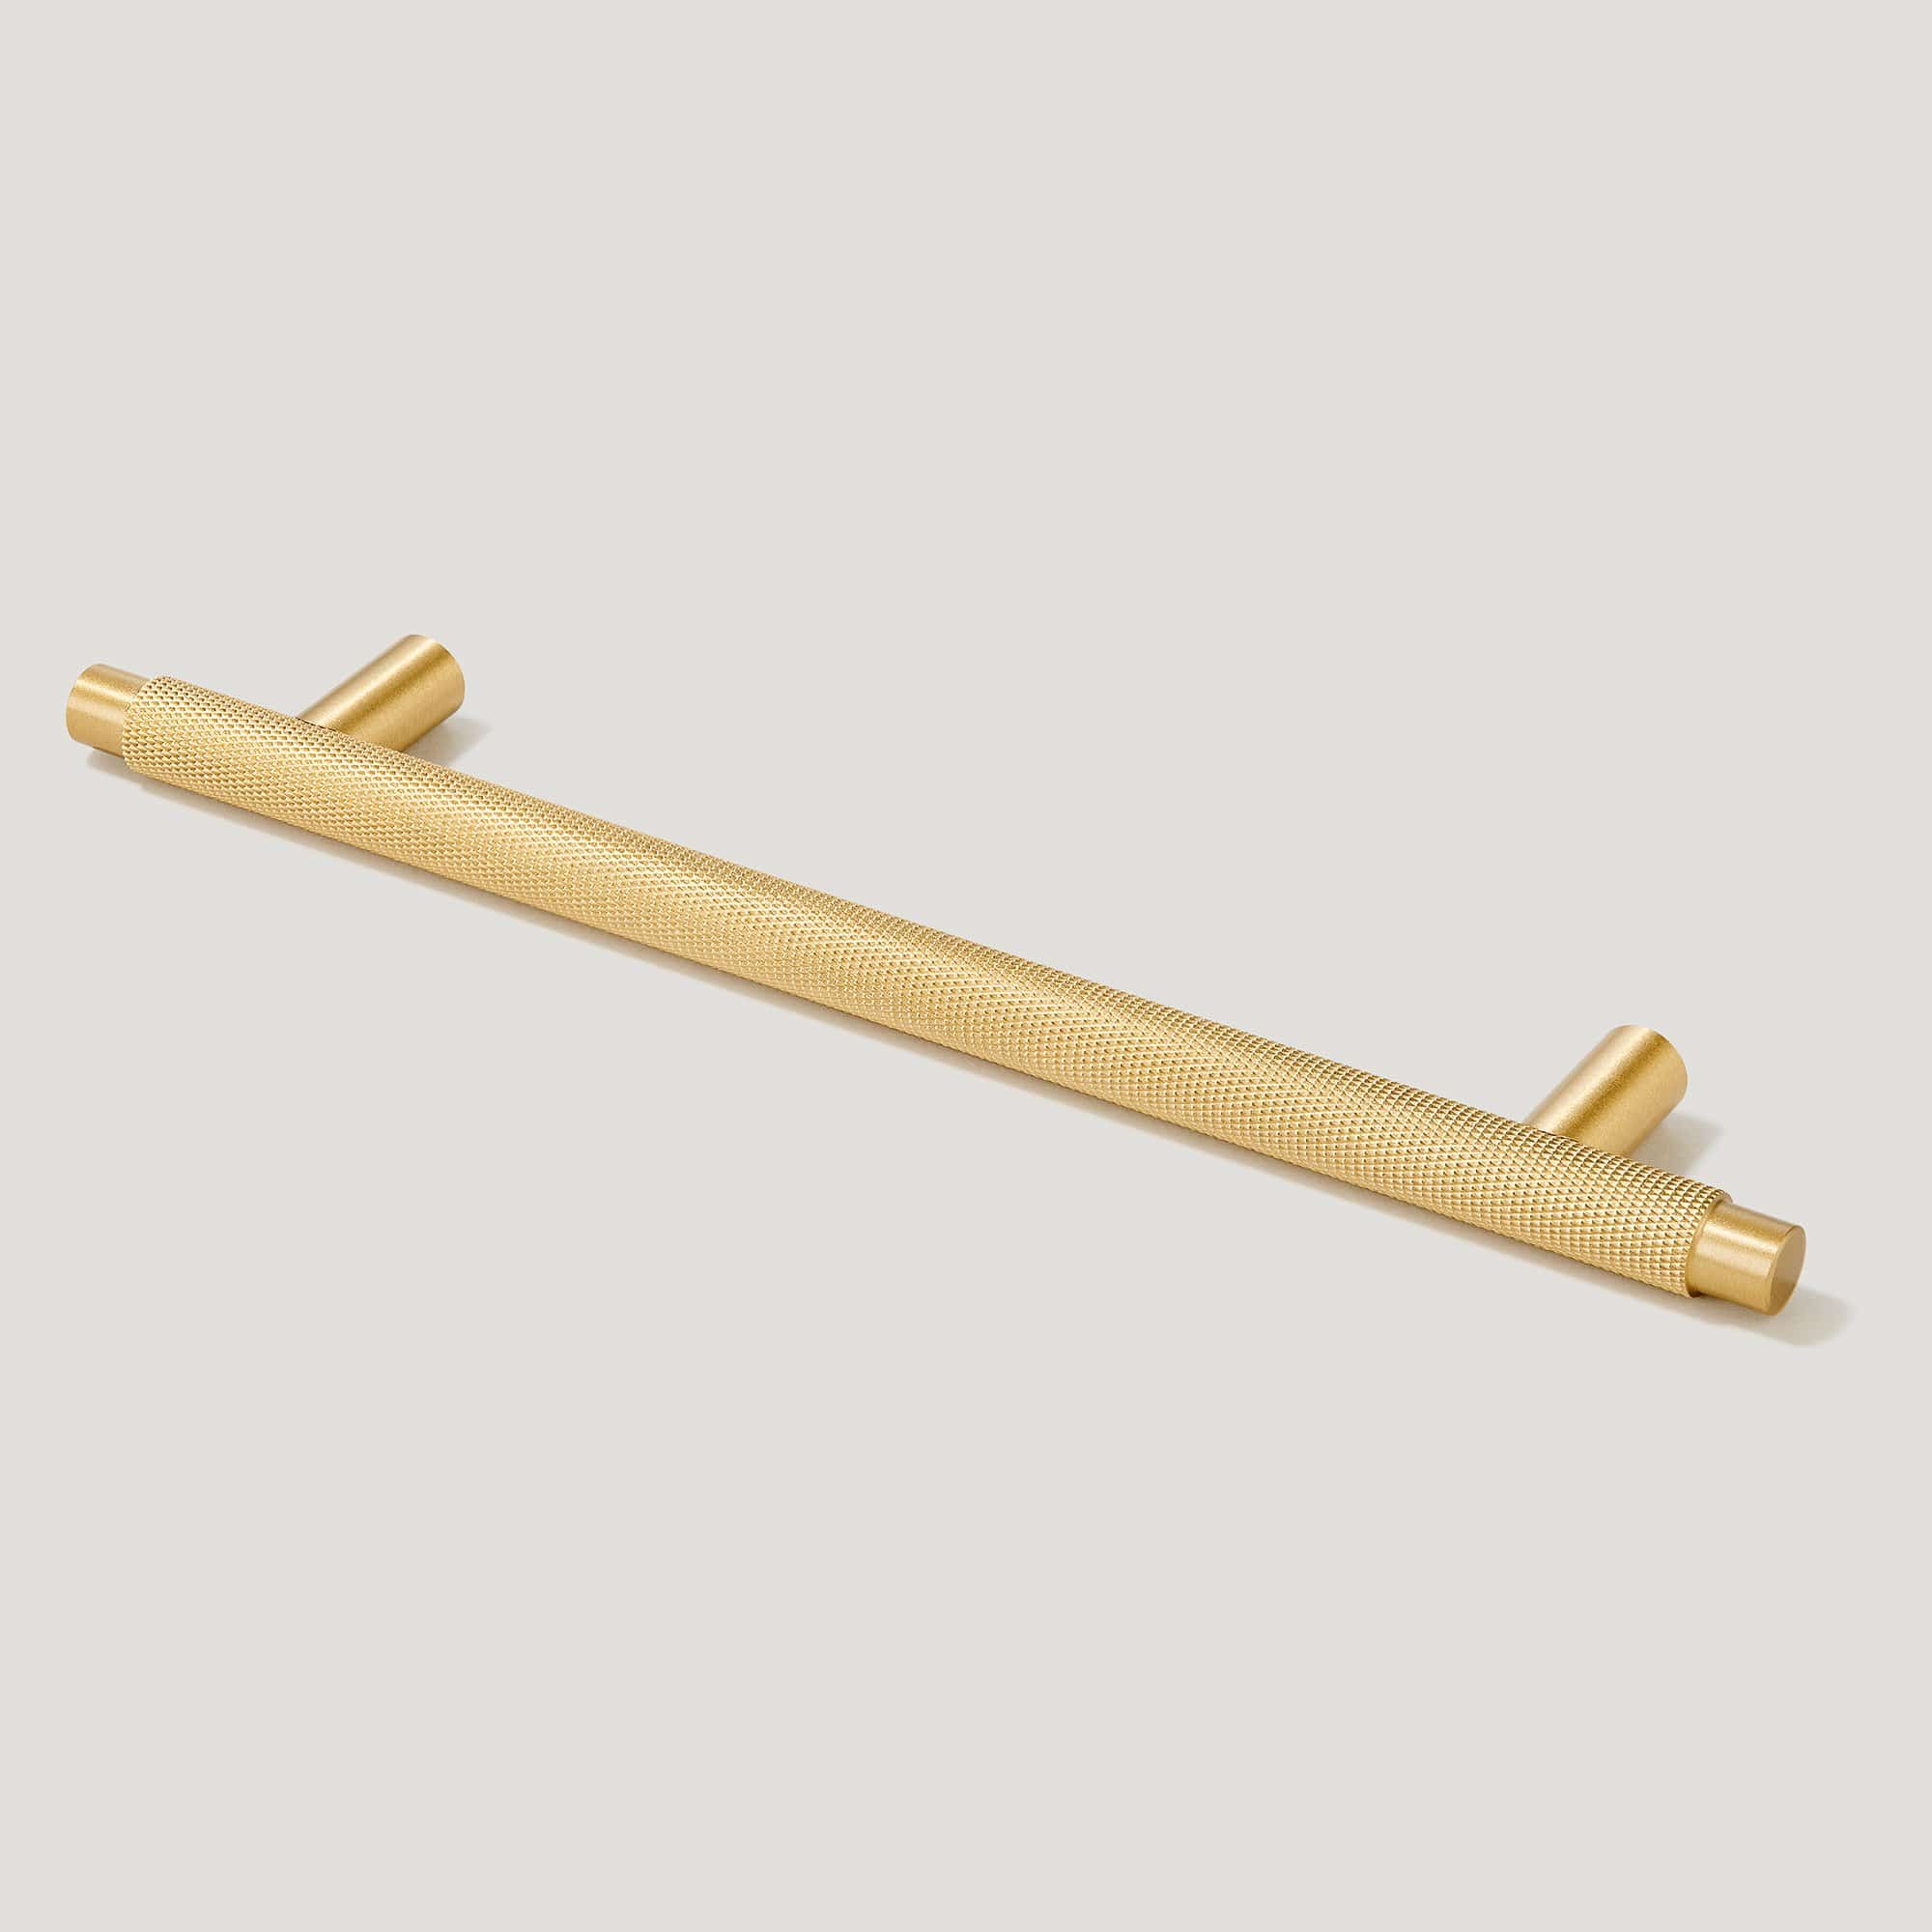 Plank Hardware Handles & Knobs 220mm (160mm screw w) KEPLER Knurled T-Bar Handle - Solid Brass